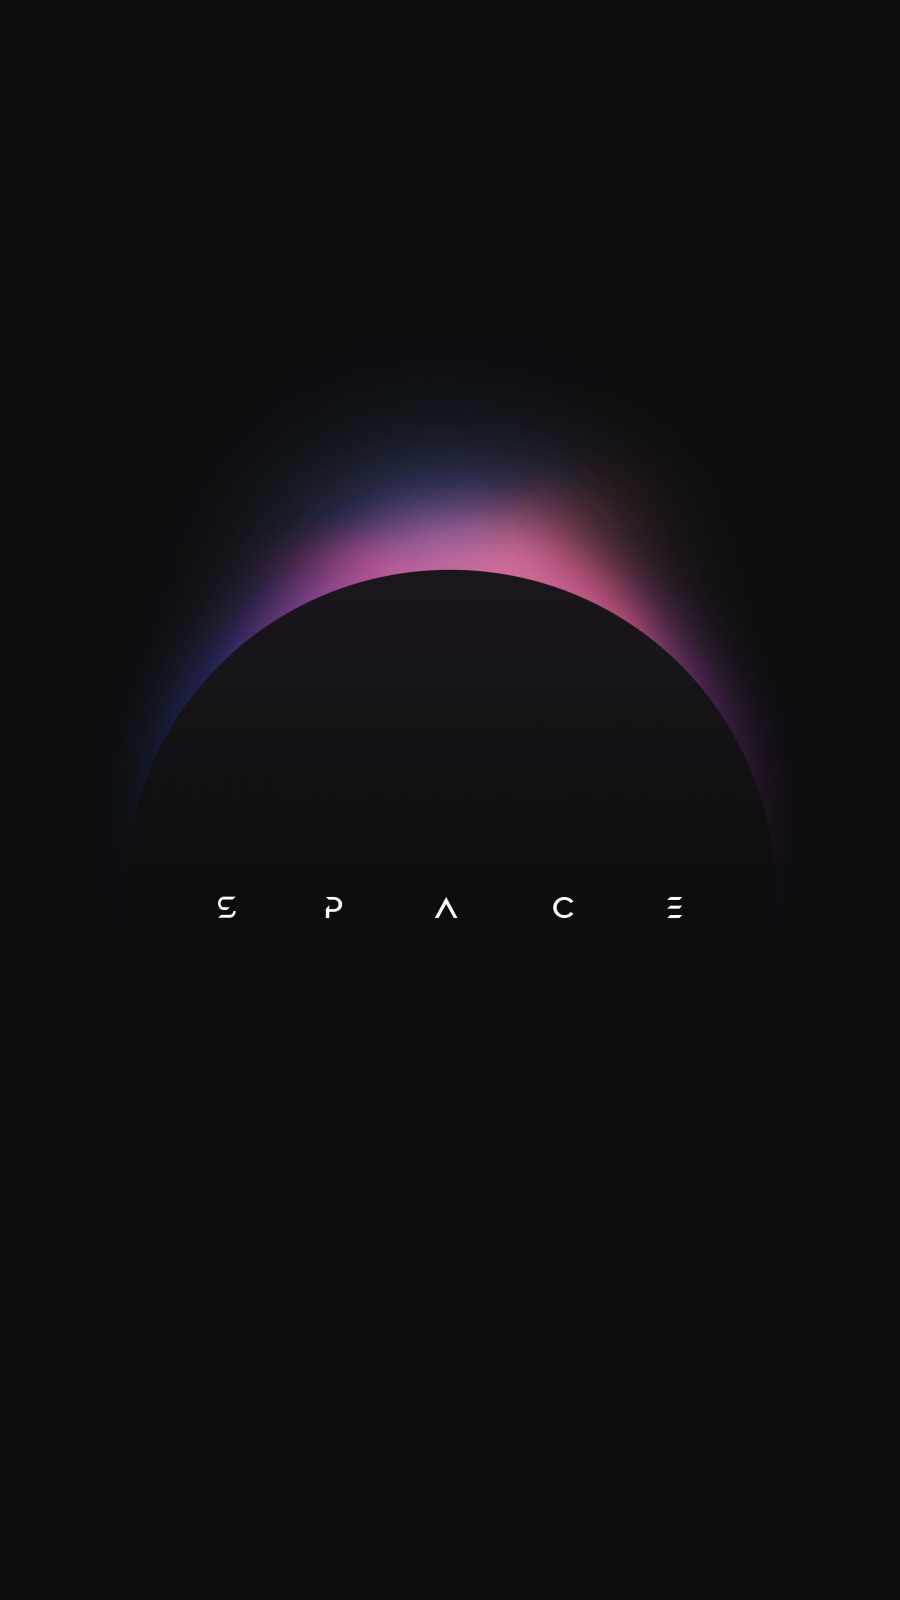 Space Explore iPhone Wallpaper